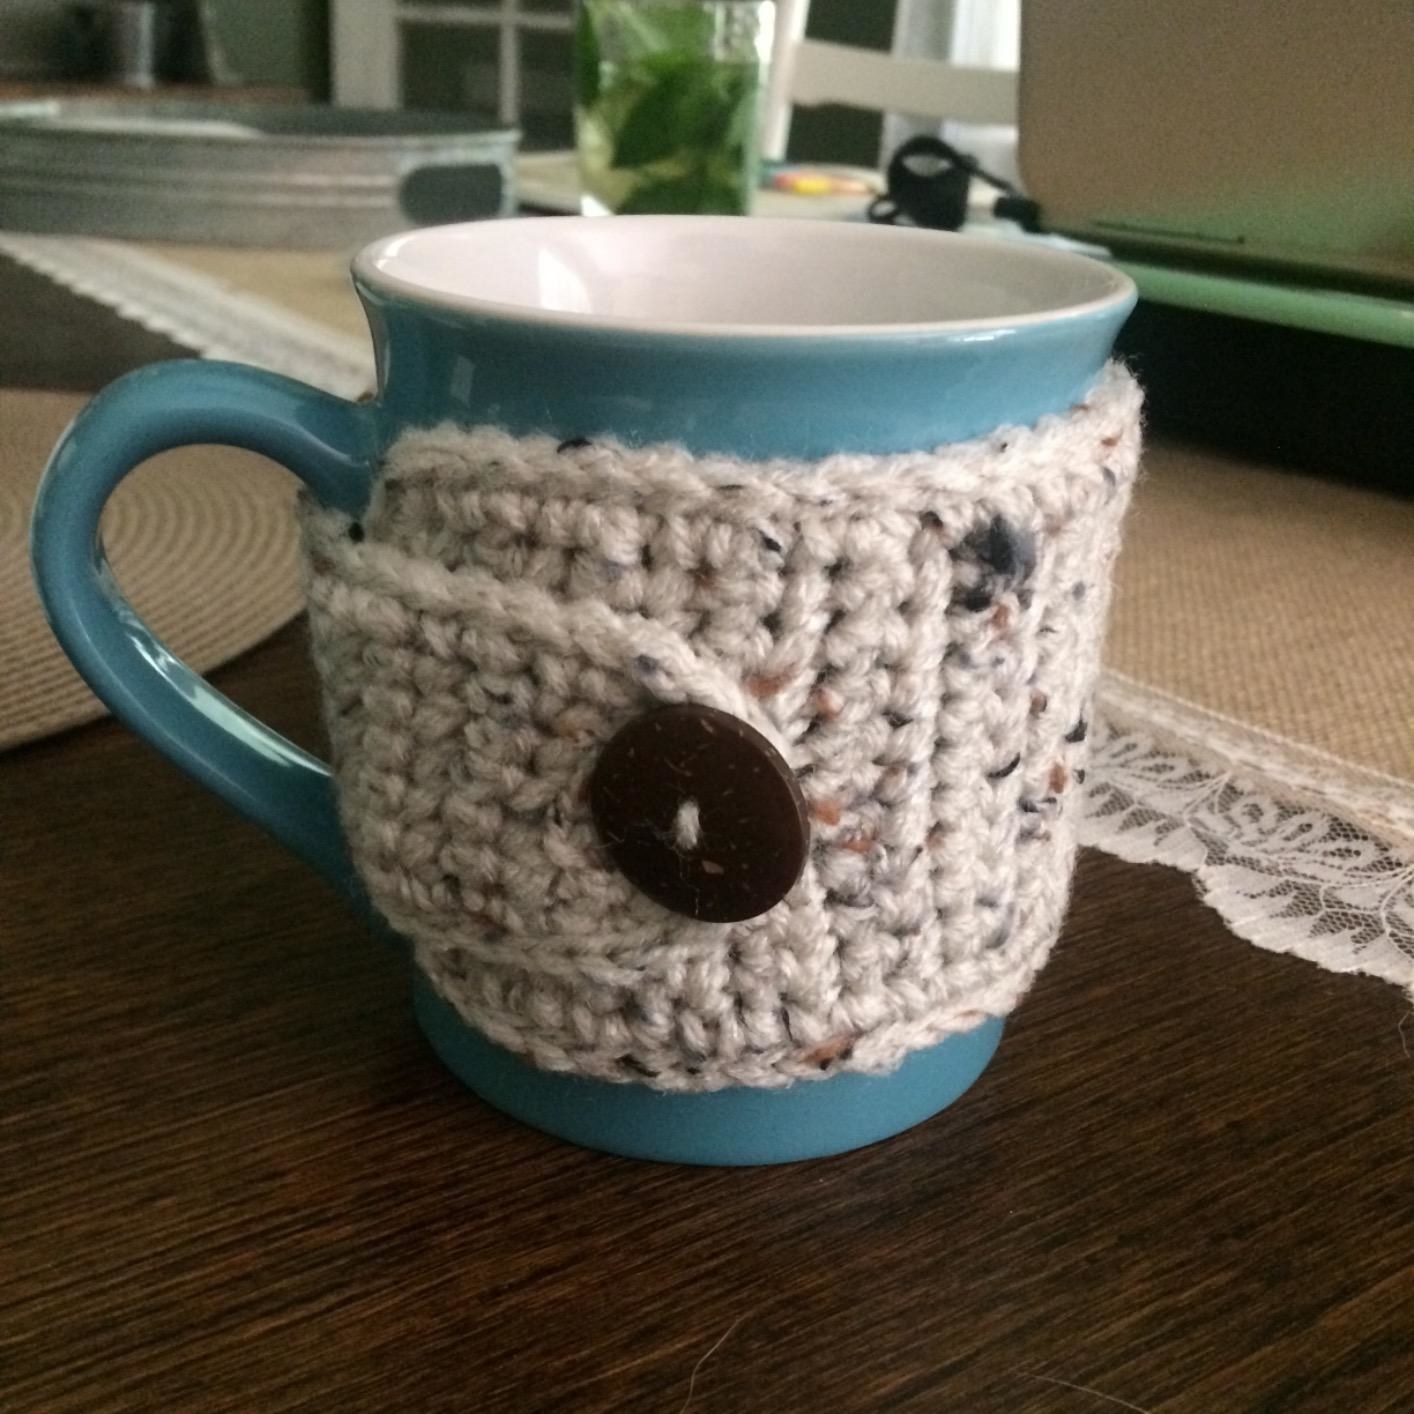 Reviewer&#x27;s mug in the cream colored crocheted mug sleeve